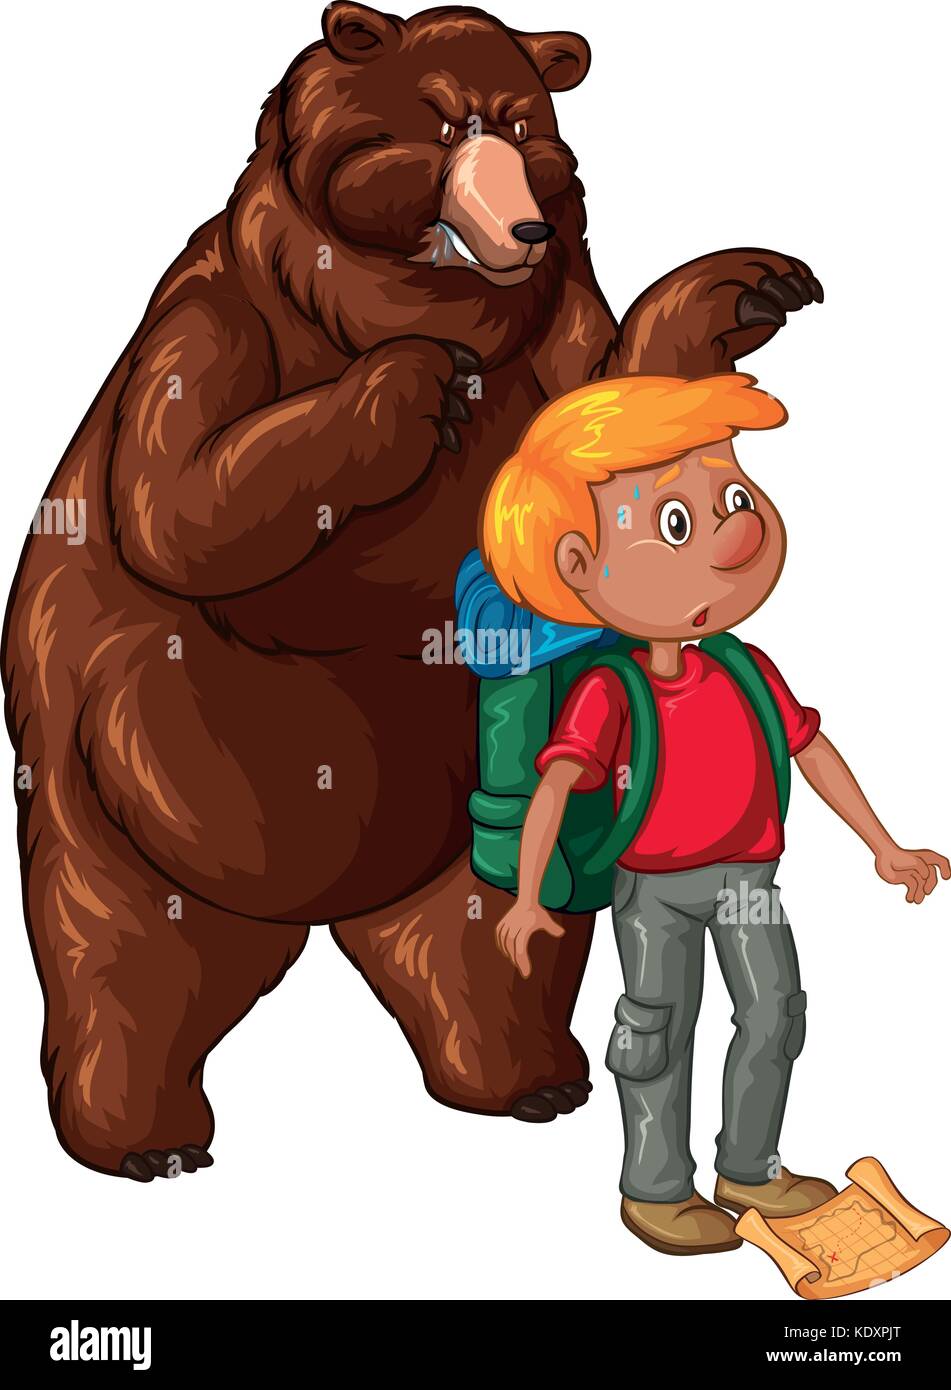 Big bear and terrified hiker illustration Stock Vector